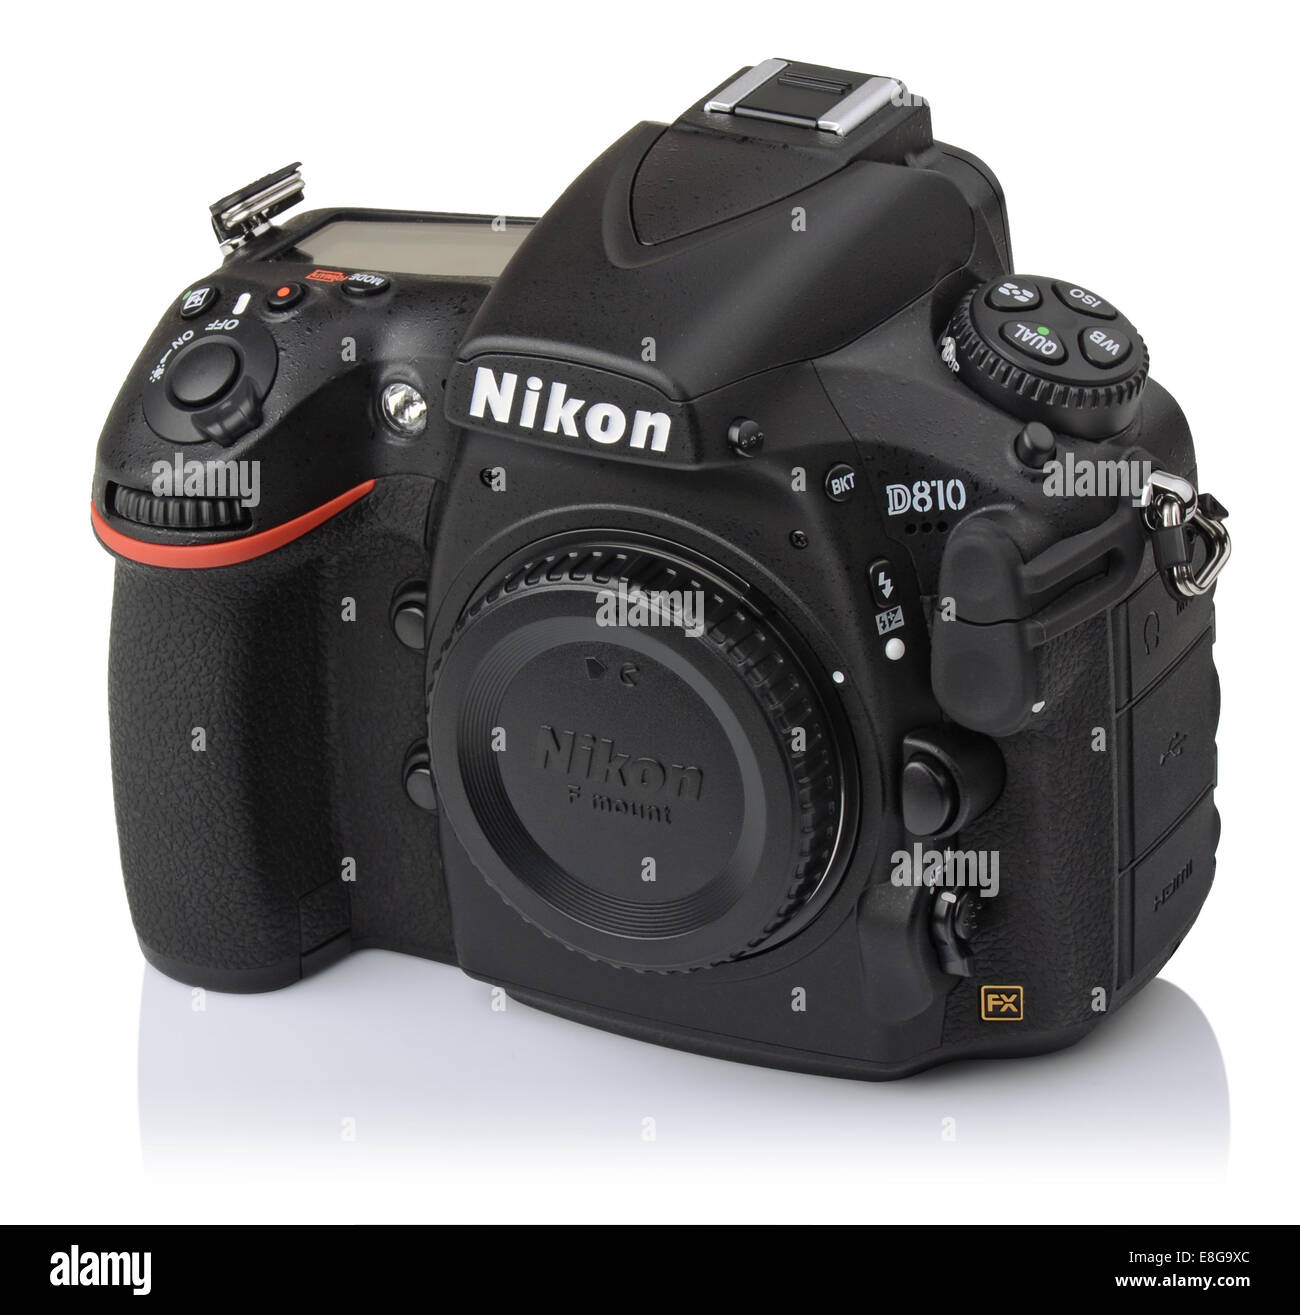 SOCHI, RUSSIA - OCTOBER 06, 2014: Nikon D810 camera body, the first digital SLR camera in Nikon's history to offer a minimum sta Stock Photo